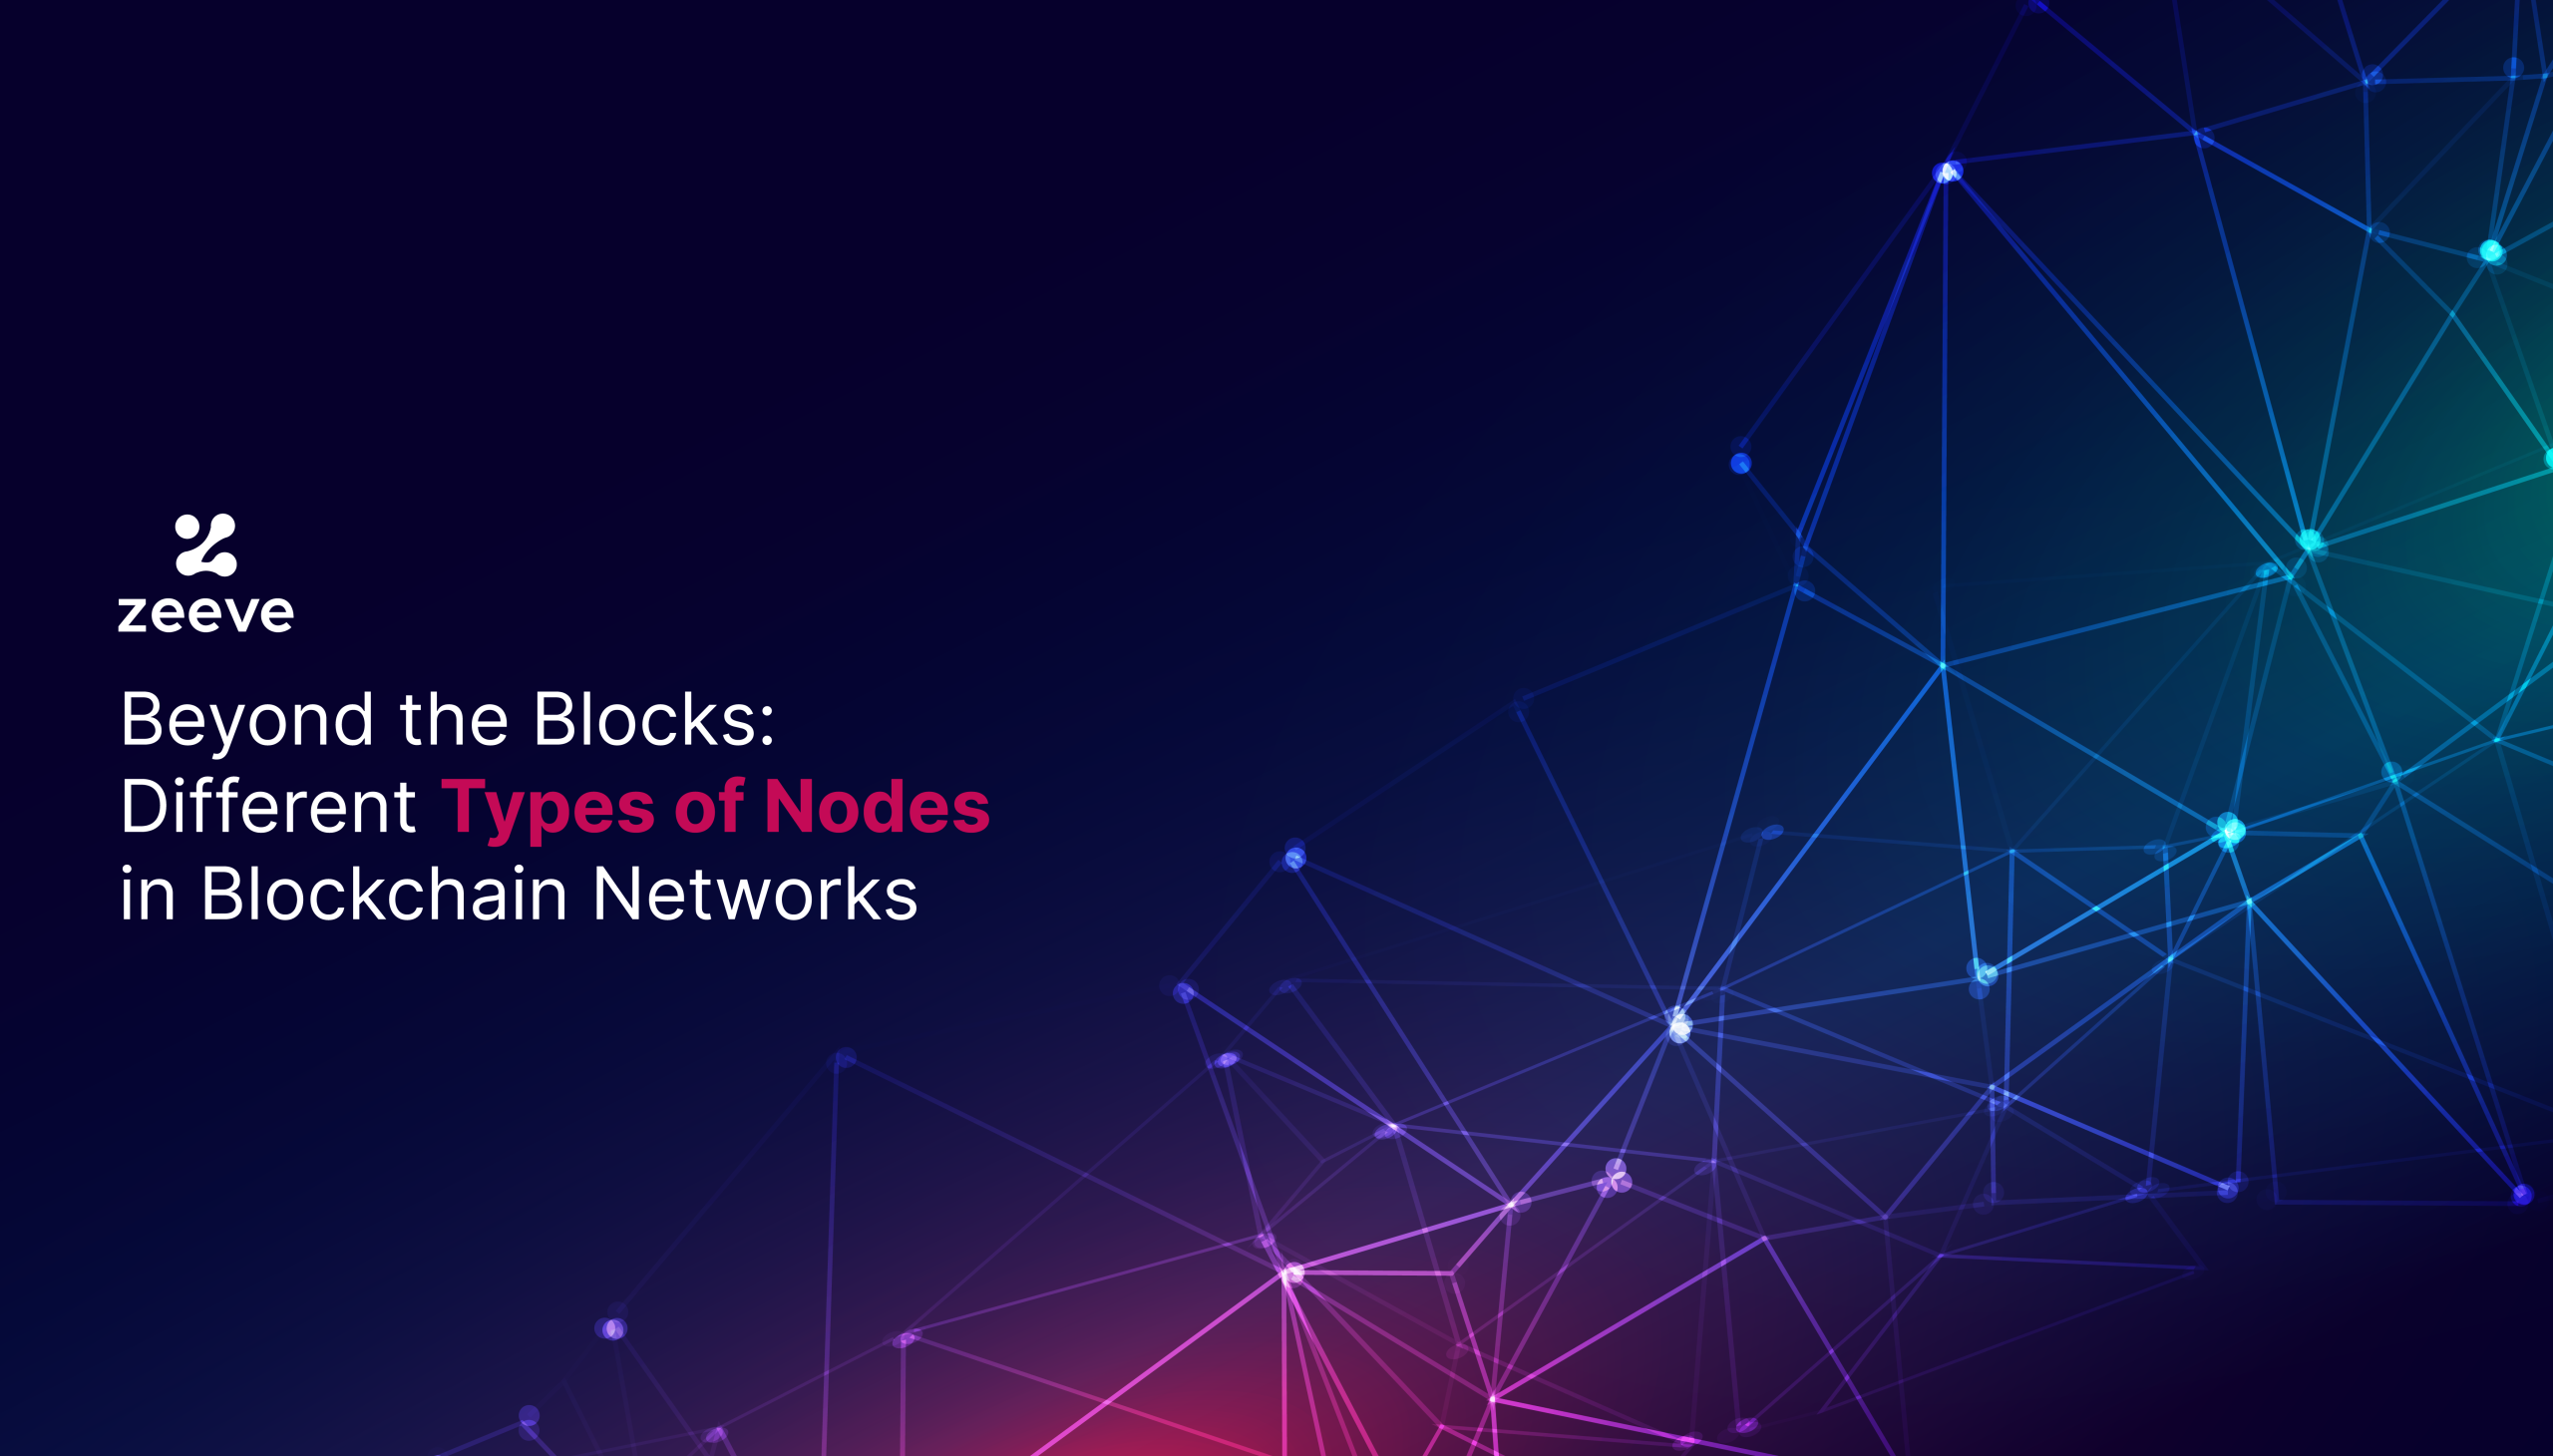 types of blockchain nodes